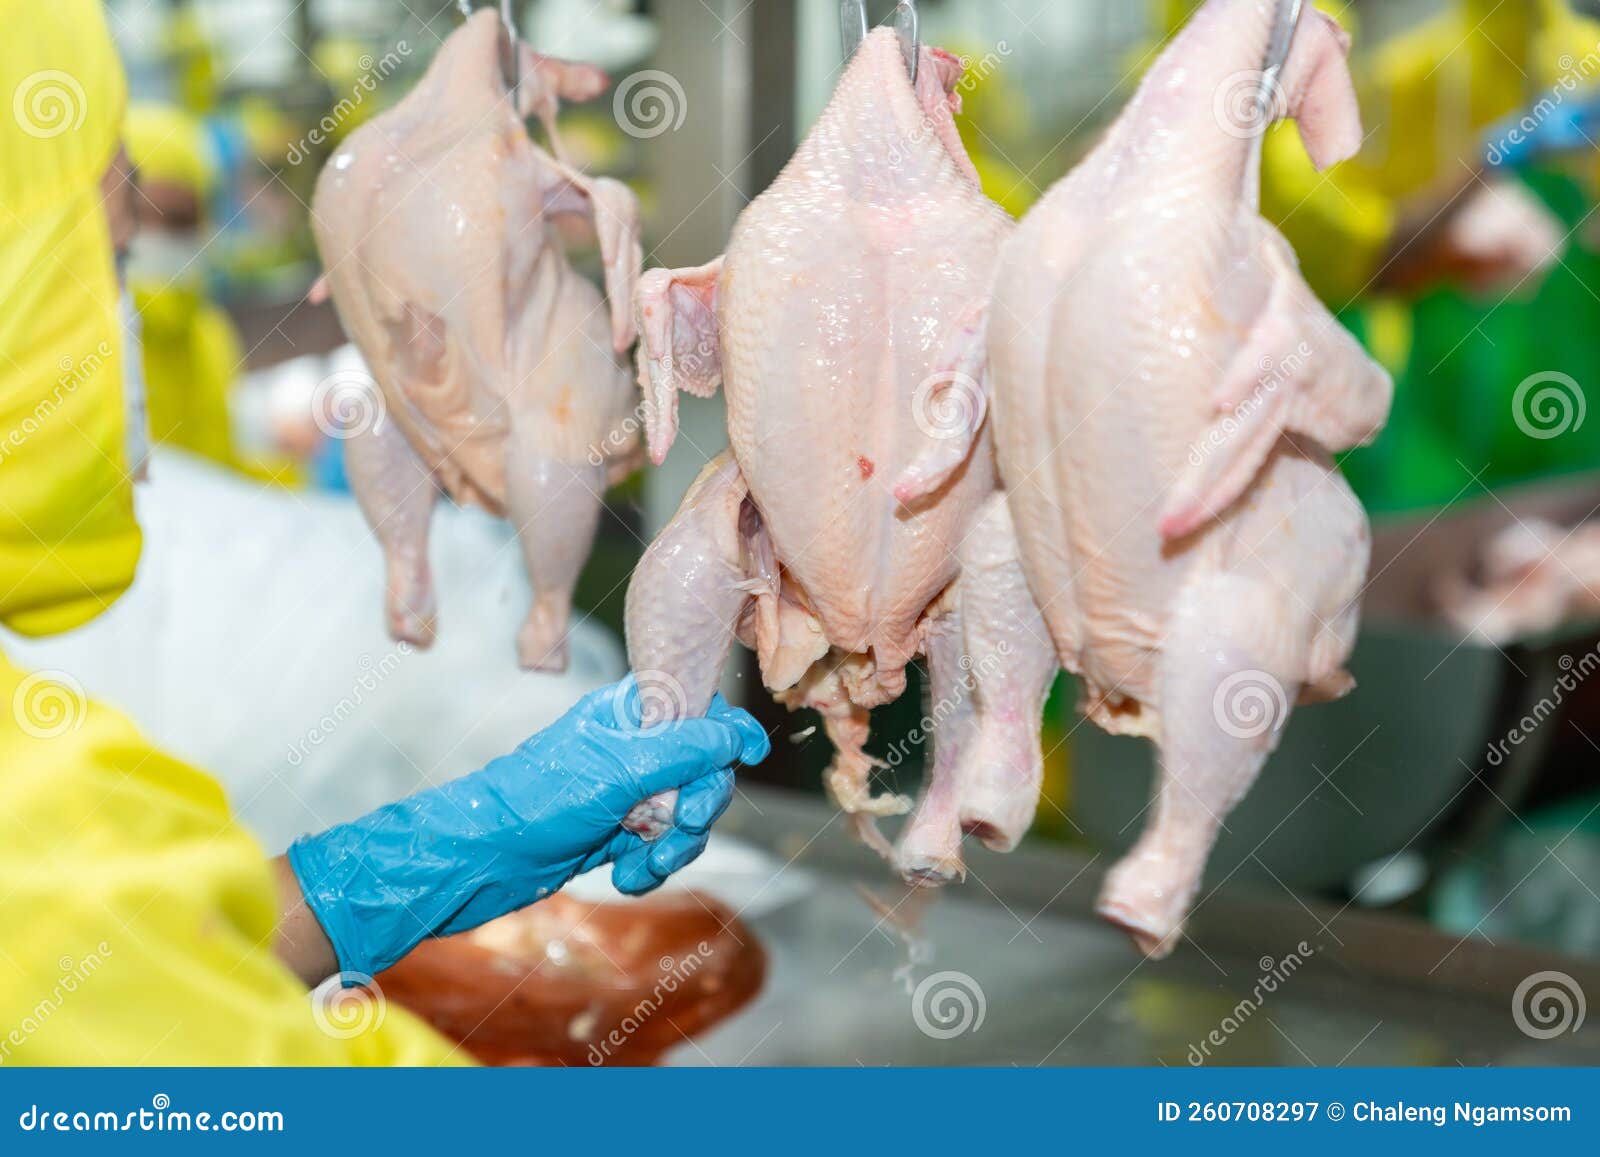 https://thumbs.dreamstime.com/z/hand-blue-gloves-pull-chicken-leg-conveyor-jack-modern-poultry-plant-hand-blue-gloves-pull-chicken-leg-conveyor-260708297.jpg